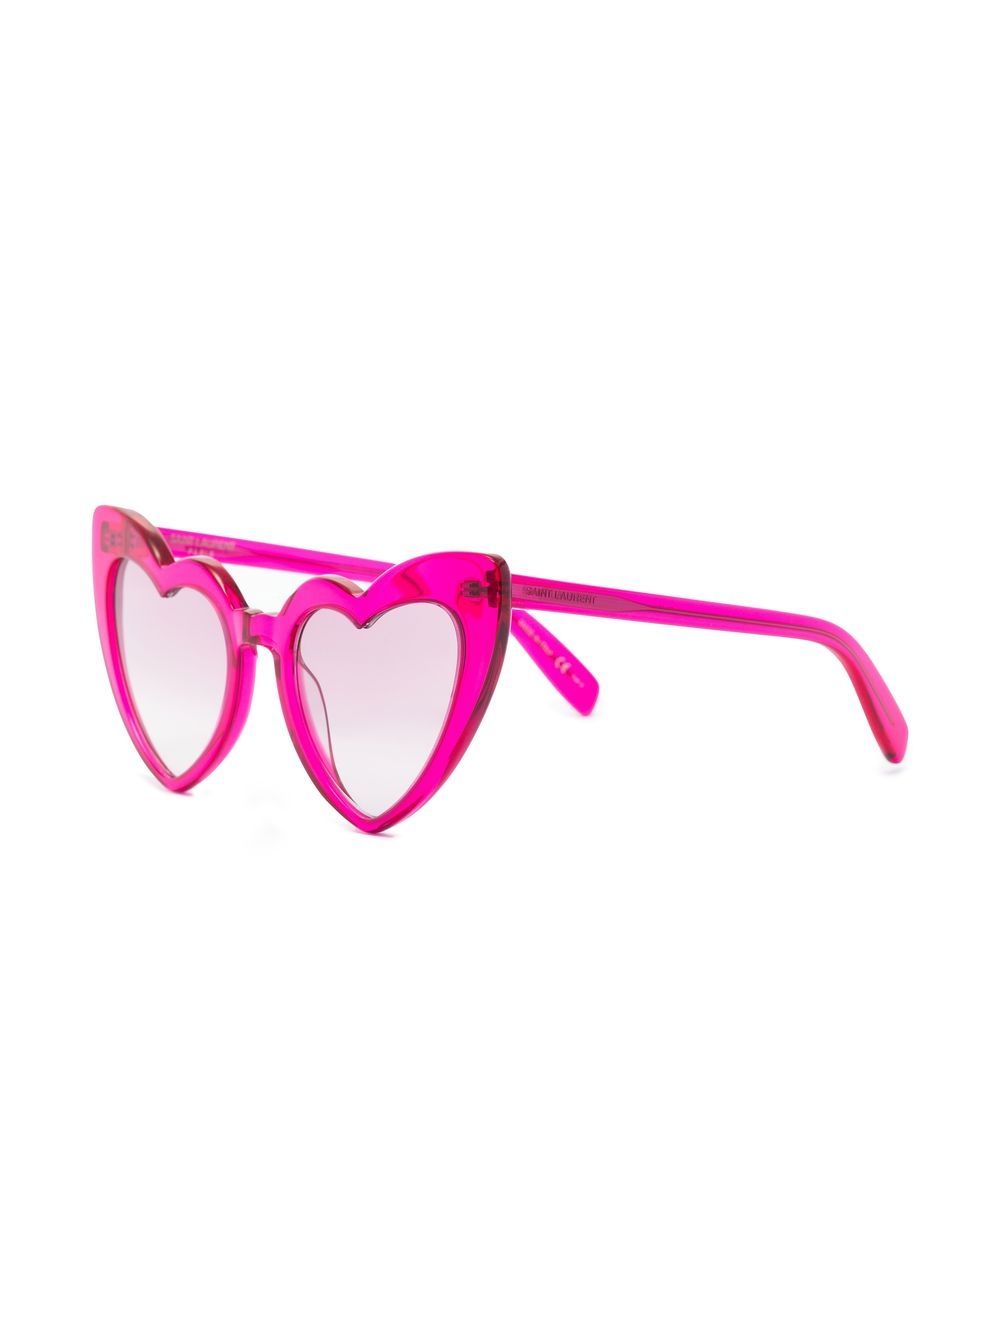 Yves Saint Laurent - New Wave SL 181 Loulou Sunglasses - Beige